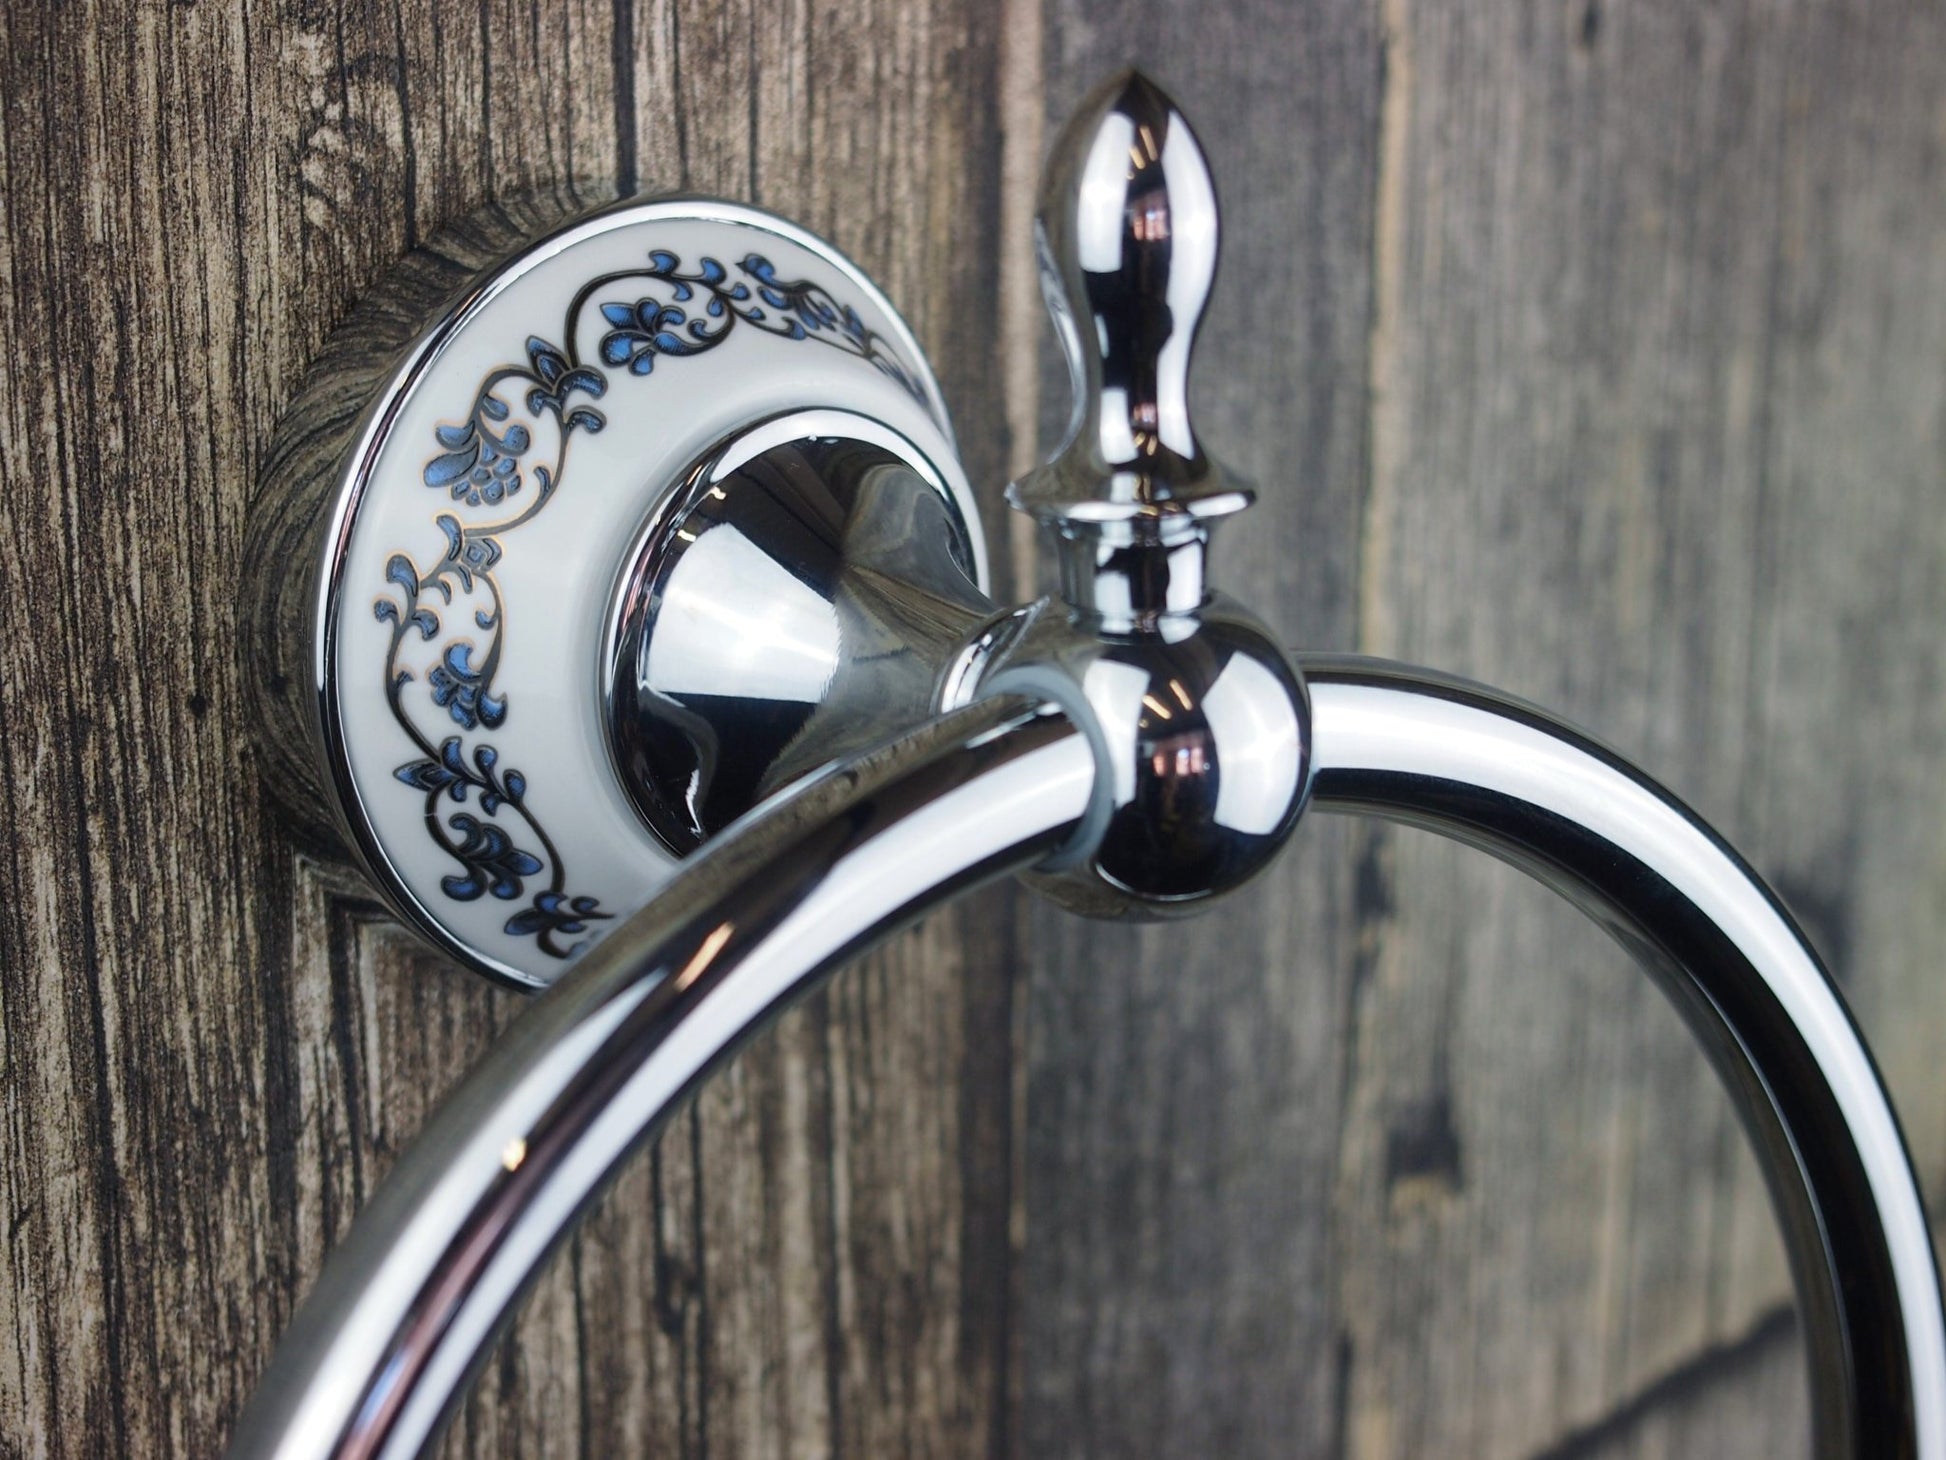 Rustic Bathroom Accessories - Towel Ring Holder Lavande Chrome - |VESIMI Design| Luxury and Rustic bathrooms online